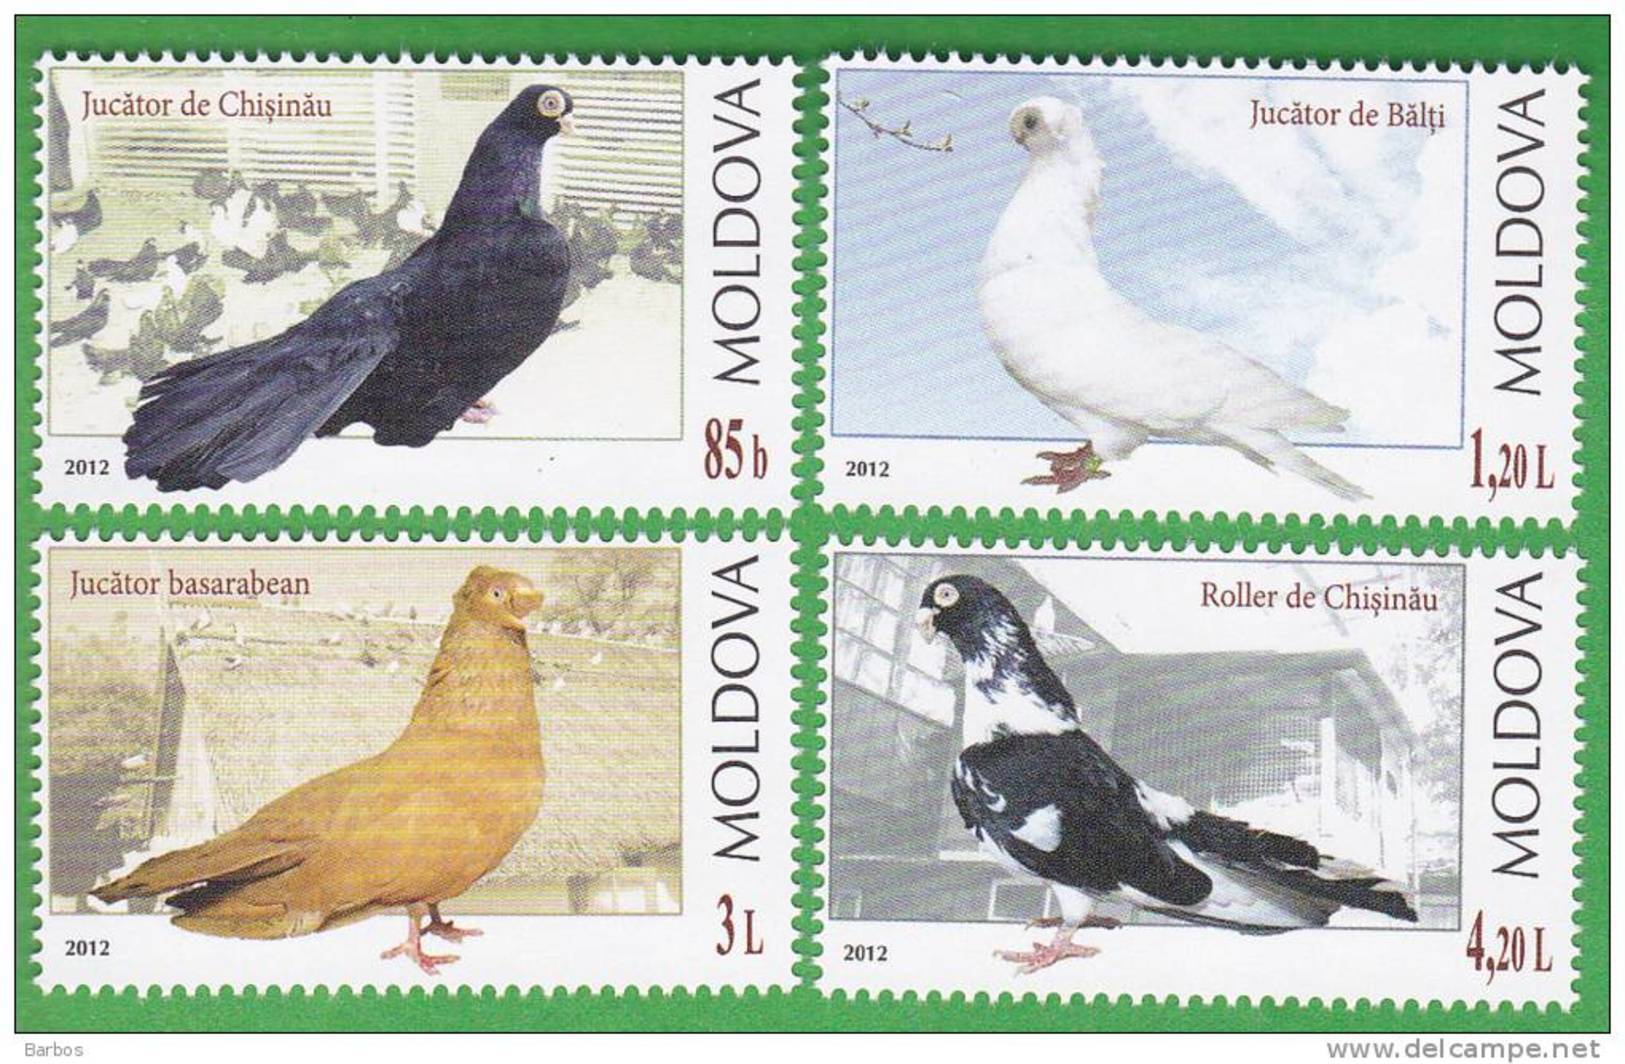 Moldova ,  Moldavie , Moldau , 2012 , Birds ; Pigeons Of Moldova  ; Las Palomas ; Tauben ; 4 V, MNH. - Columbiformes